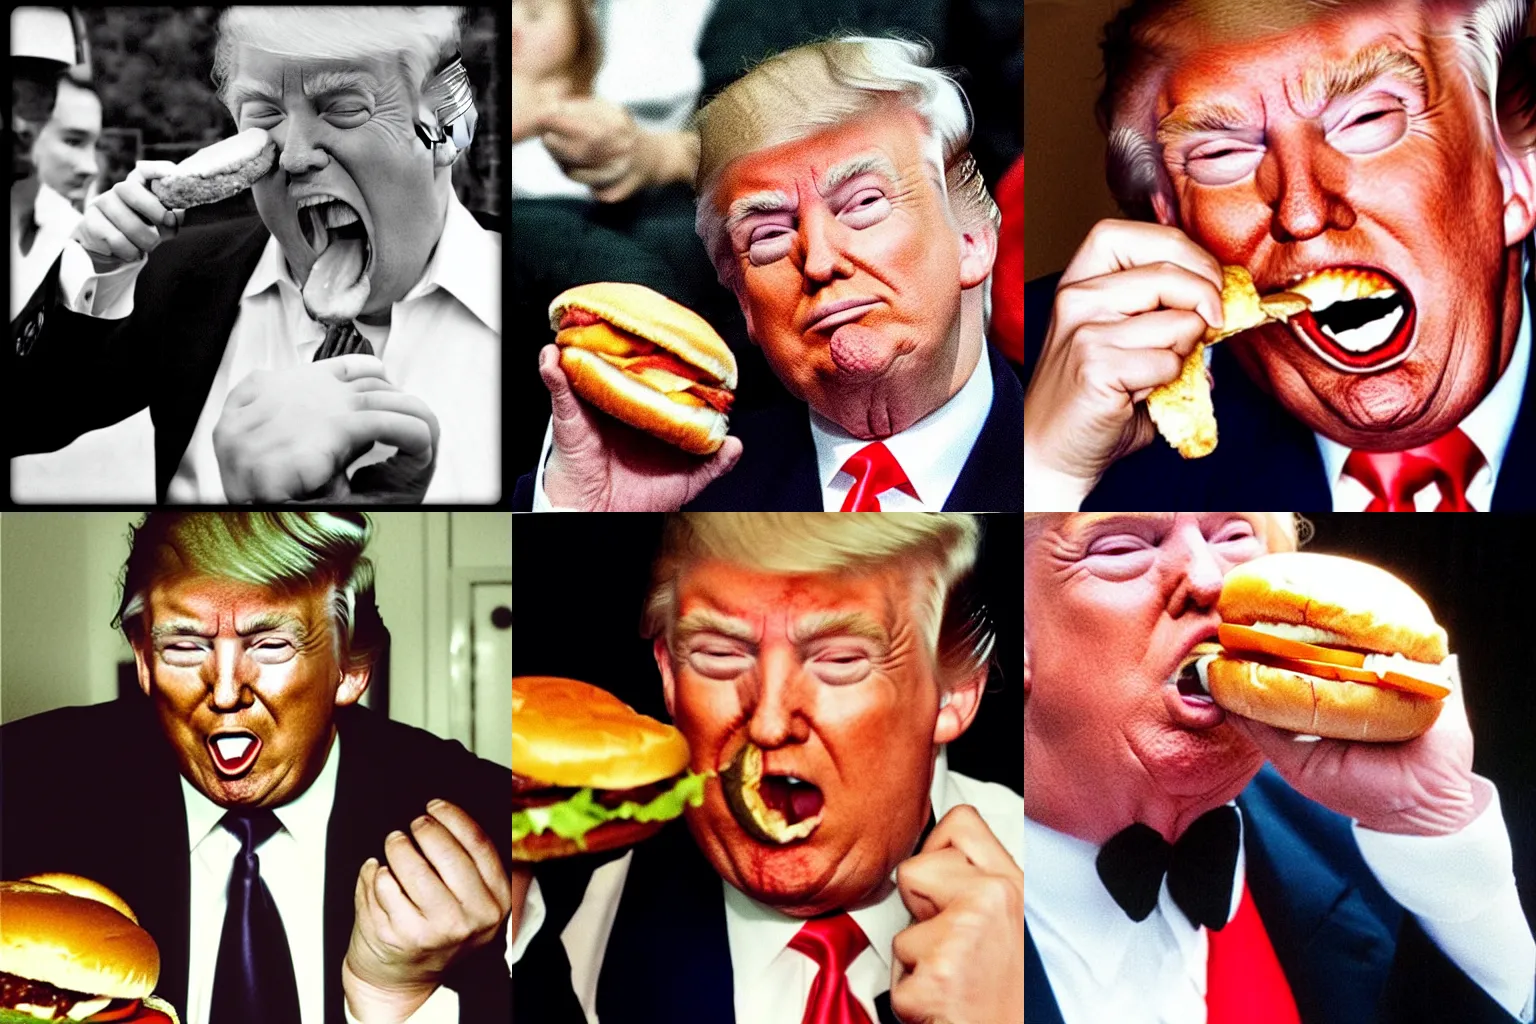 Prompt: “Donald trump lovingly licking a hamburger. Archival photo”